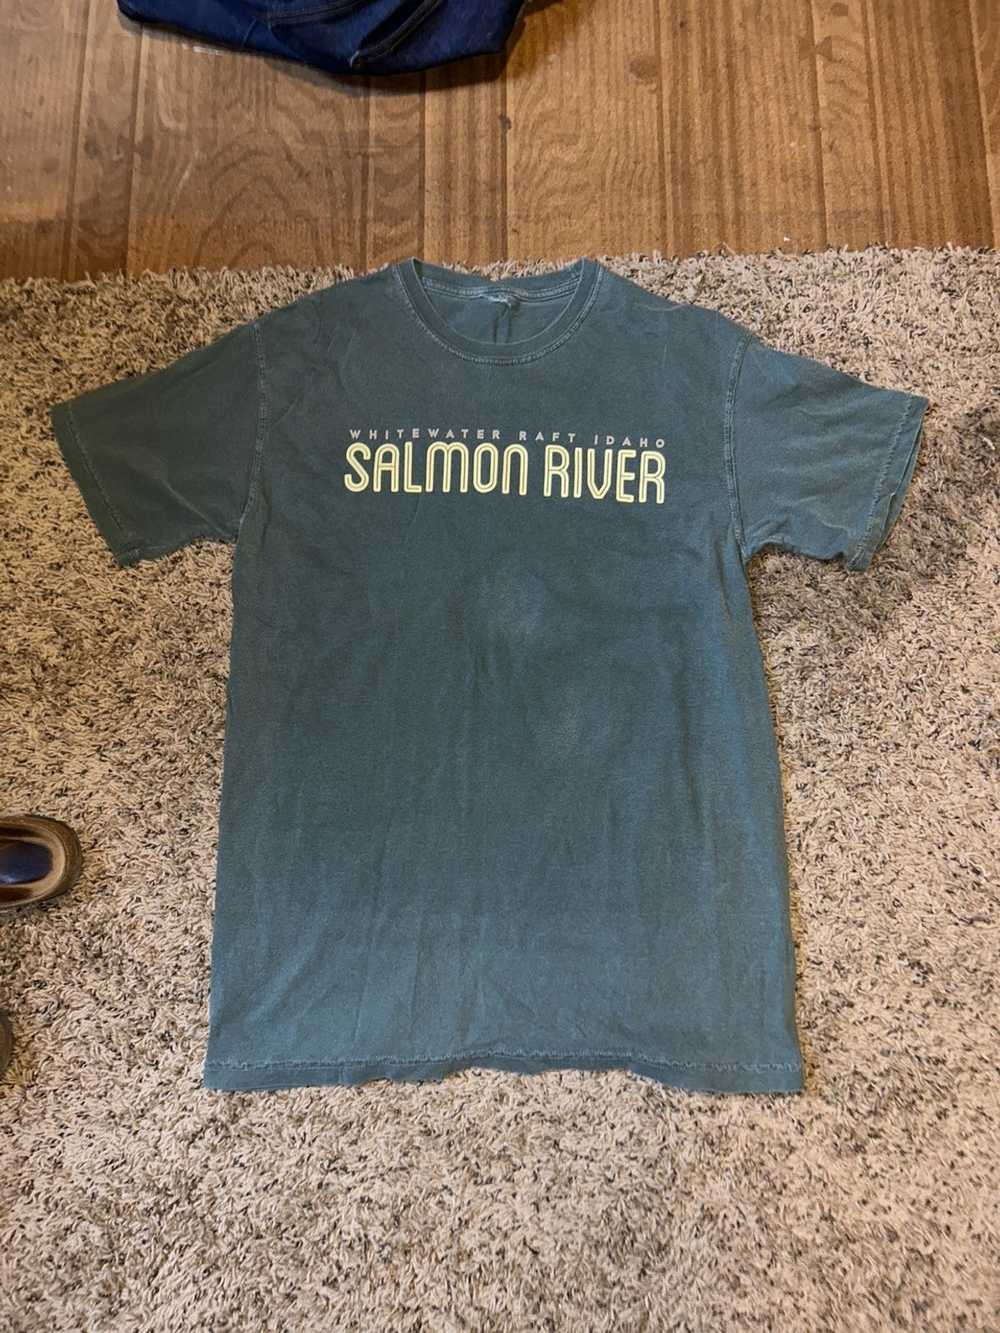 Vintage Vintage Salmon River Shirt - image 2